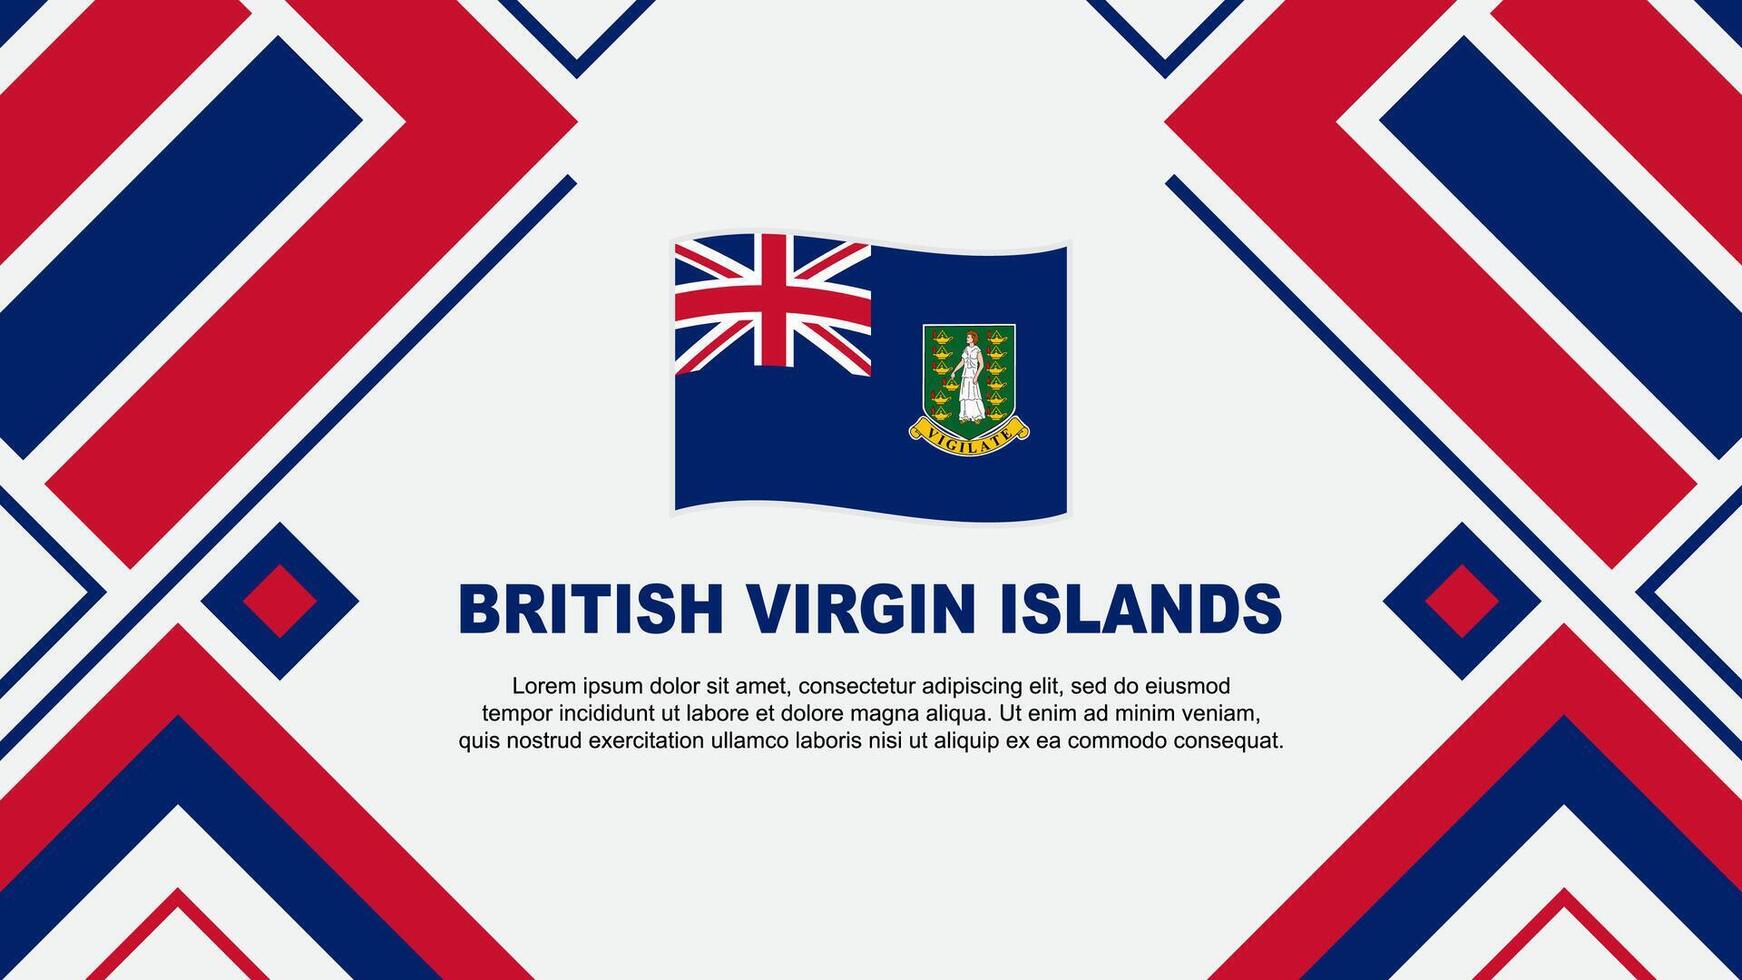 British Virgin Islands Flag Abstract Background Design Template. British Virgin Islands Independence Day Banner Wallpaper Vector Illustration. Flag